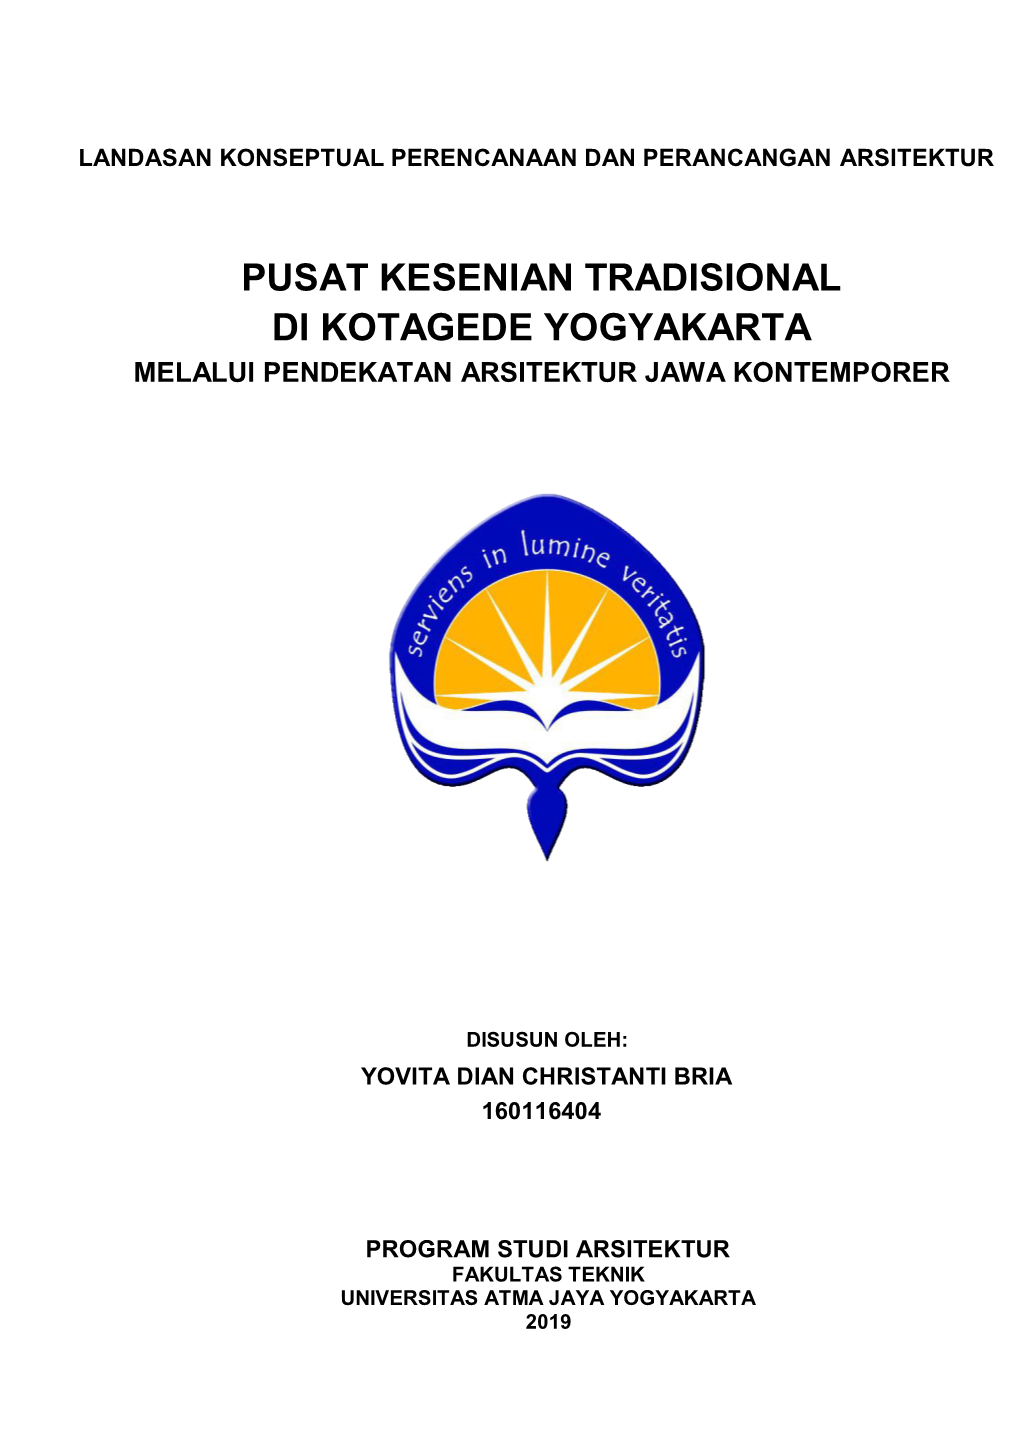 Pusat Kesenian Tradisional Di Kotagede Yogyakarta Melalui Pendekatan Arsitektur Jawa Kontemporer